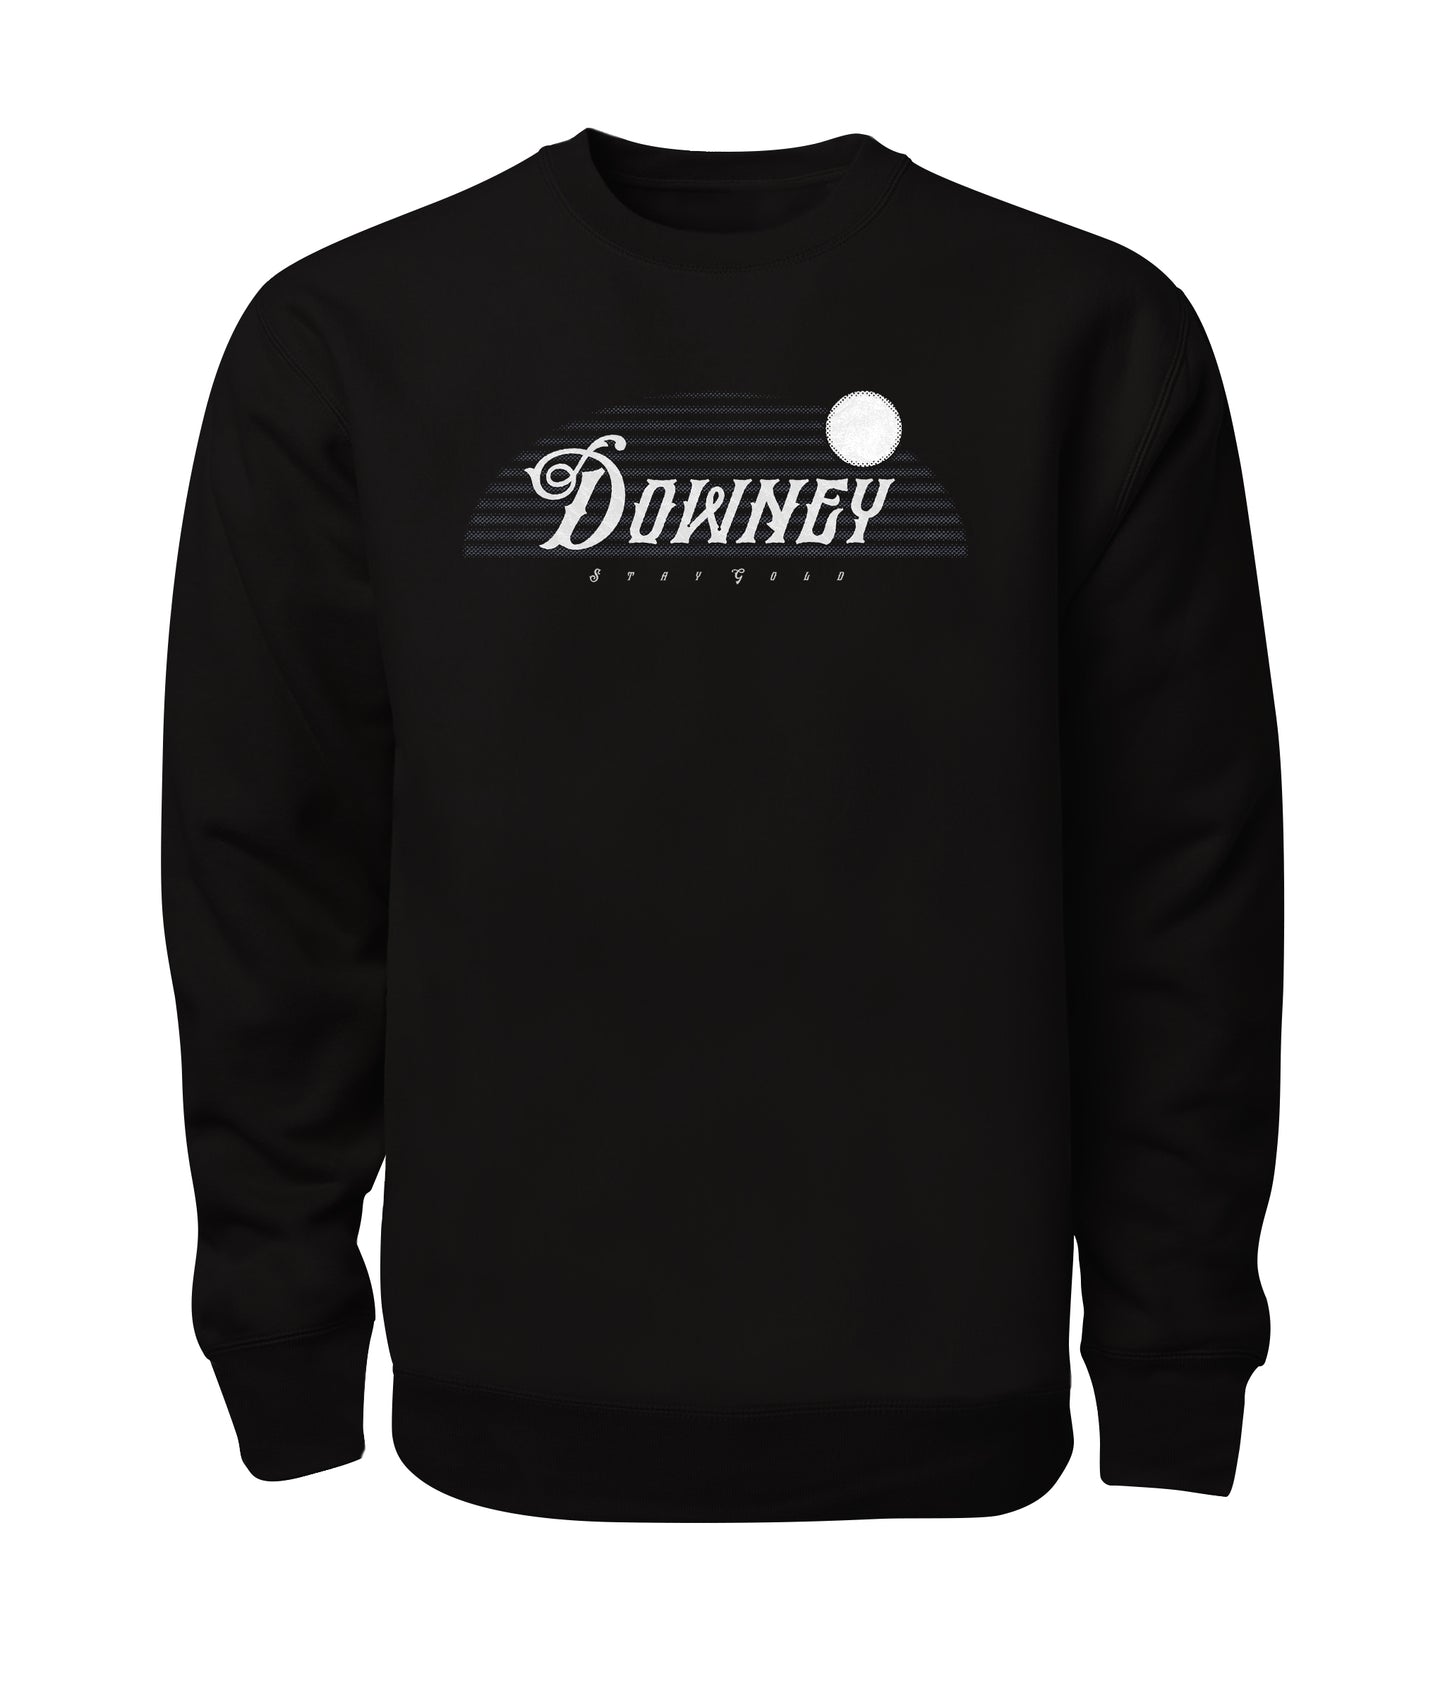 Downey Stay Gold Crewneck Sweatshirt